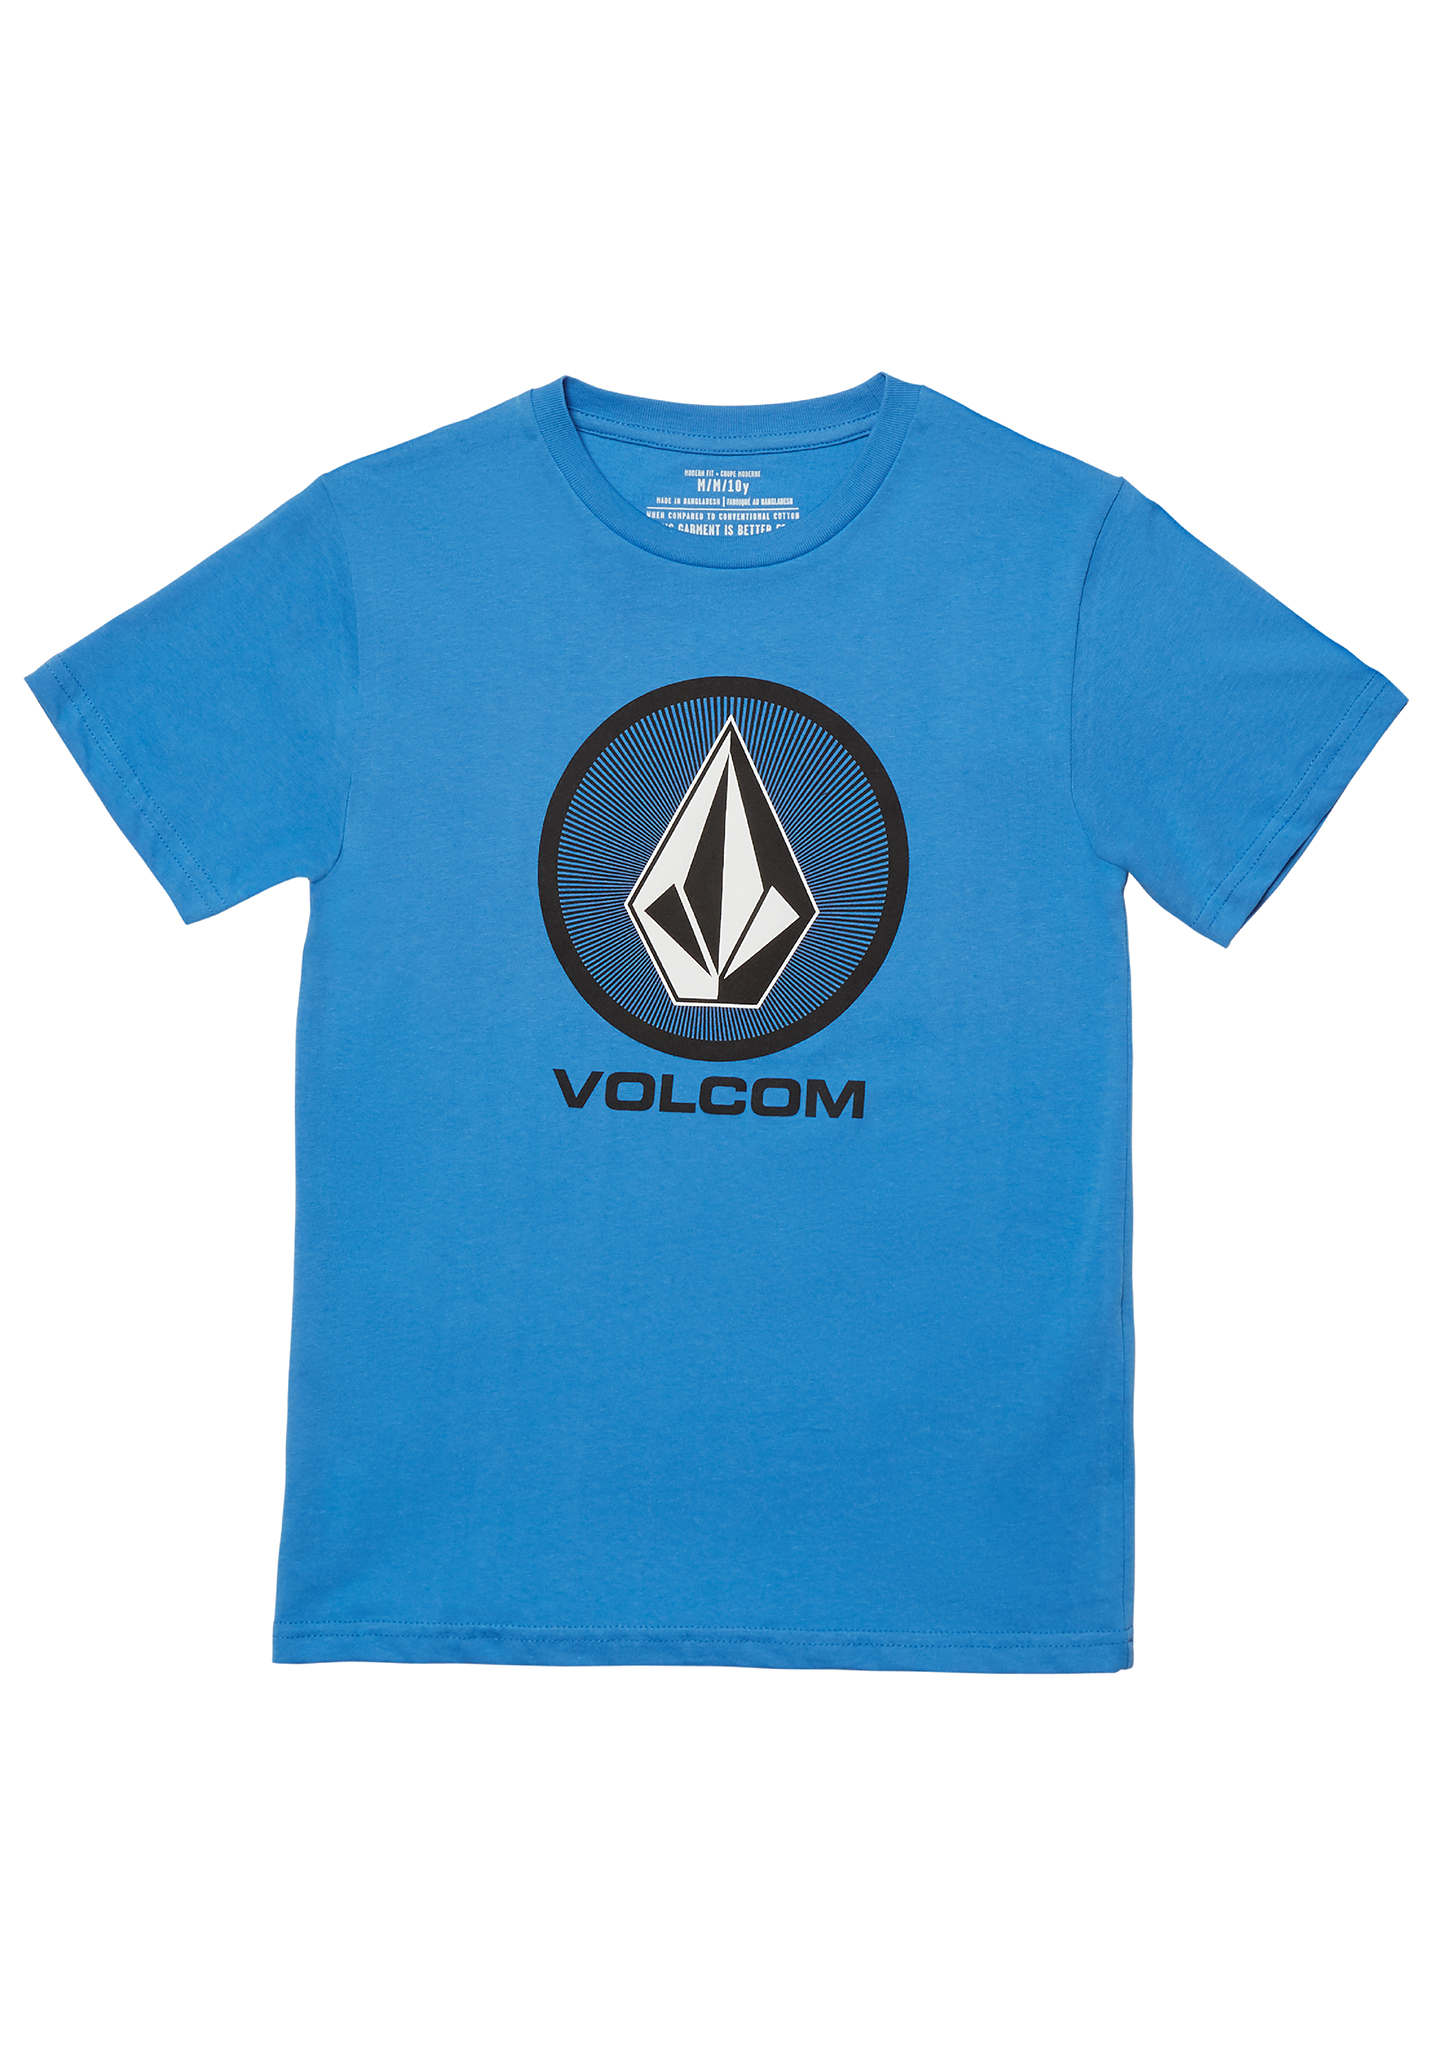 Volcom Cryptic Stone T-Shirt ballpoint blue XL